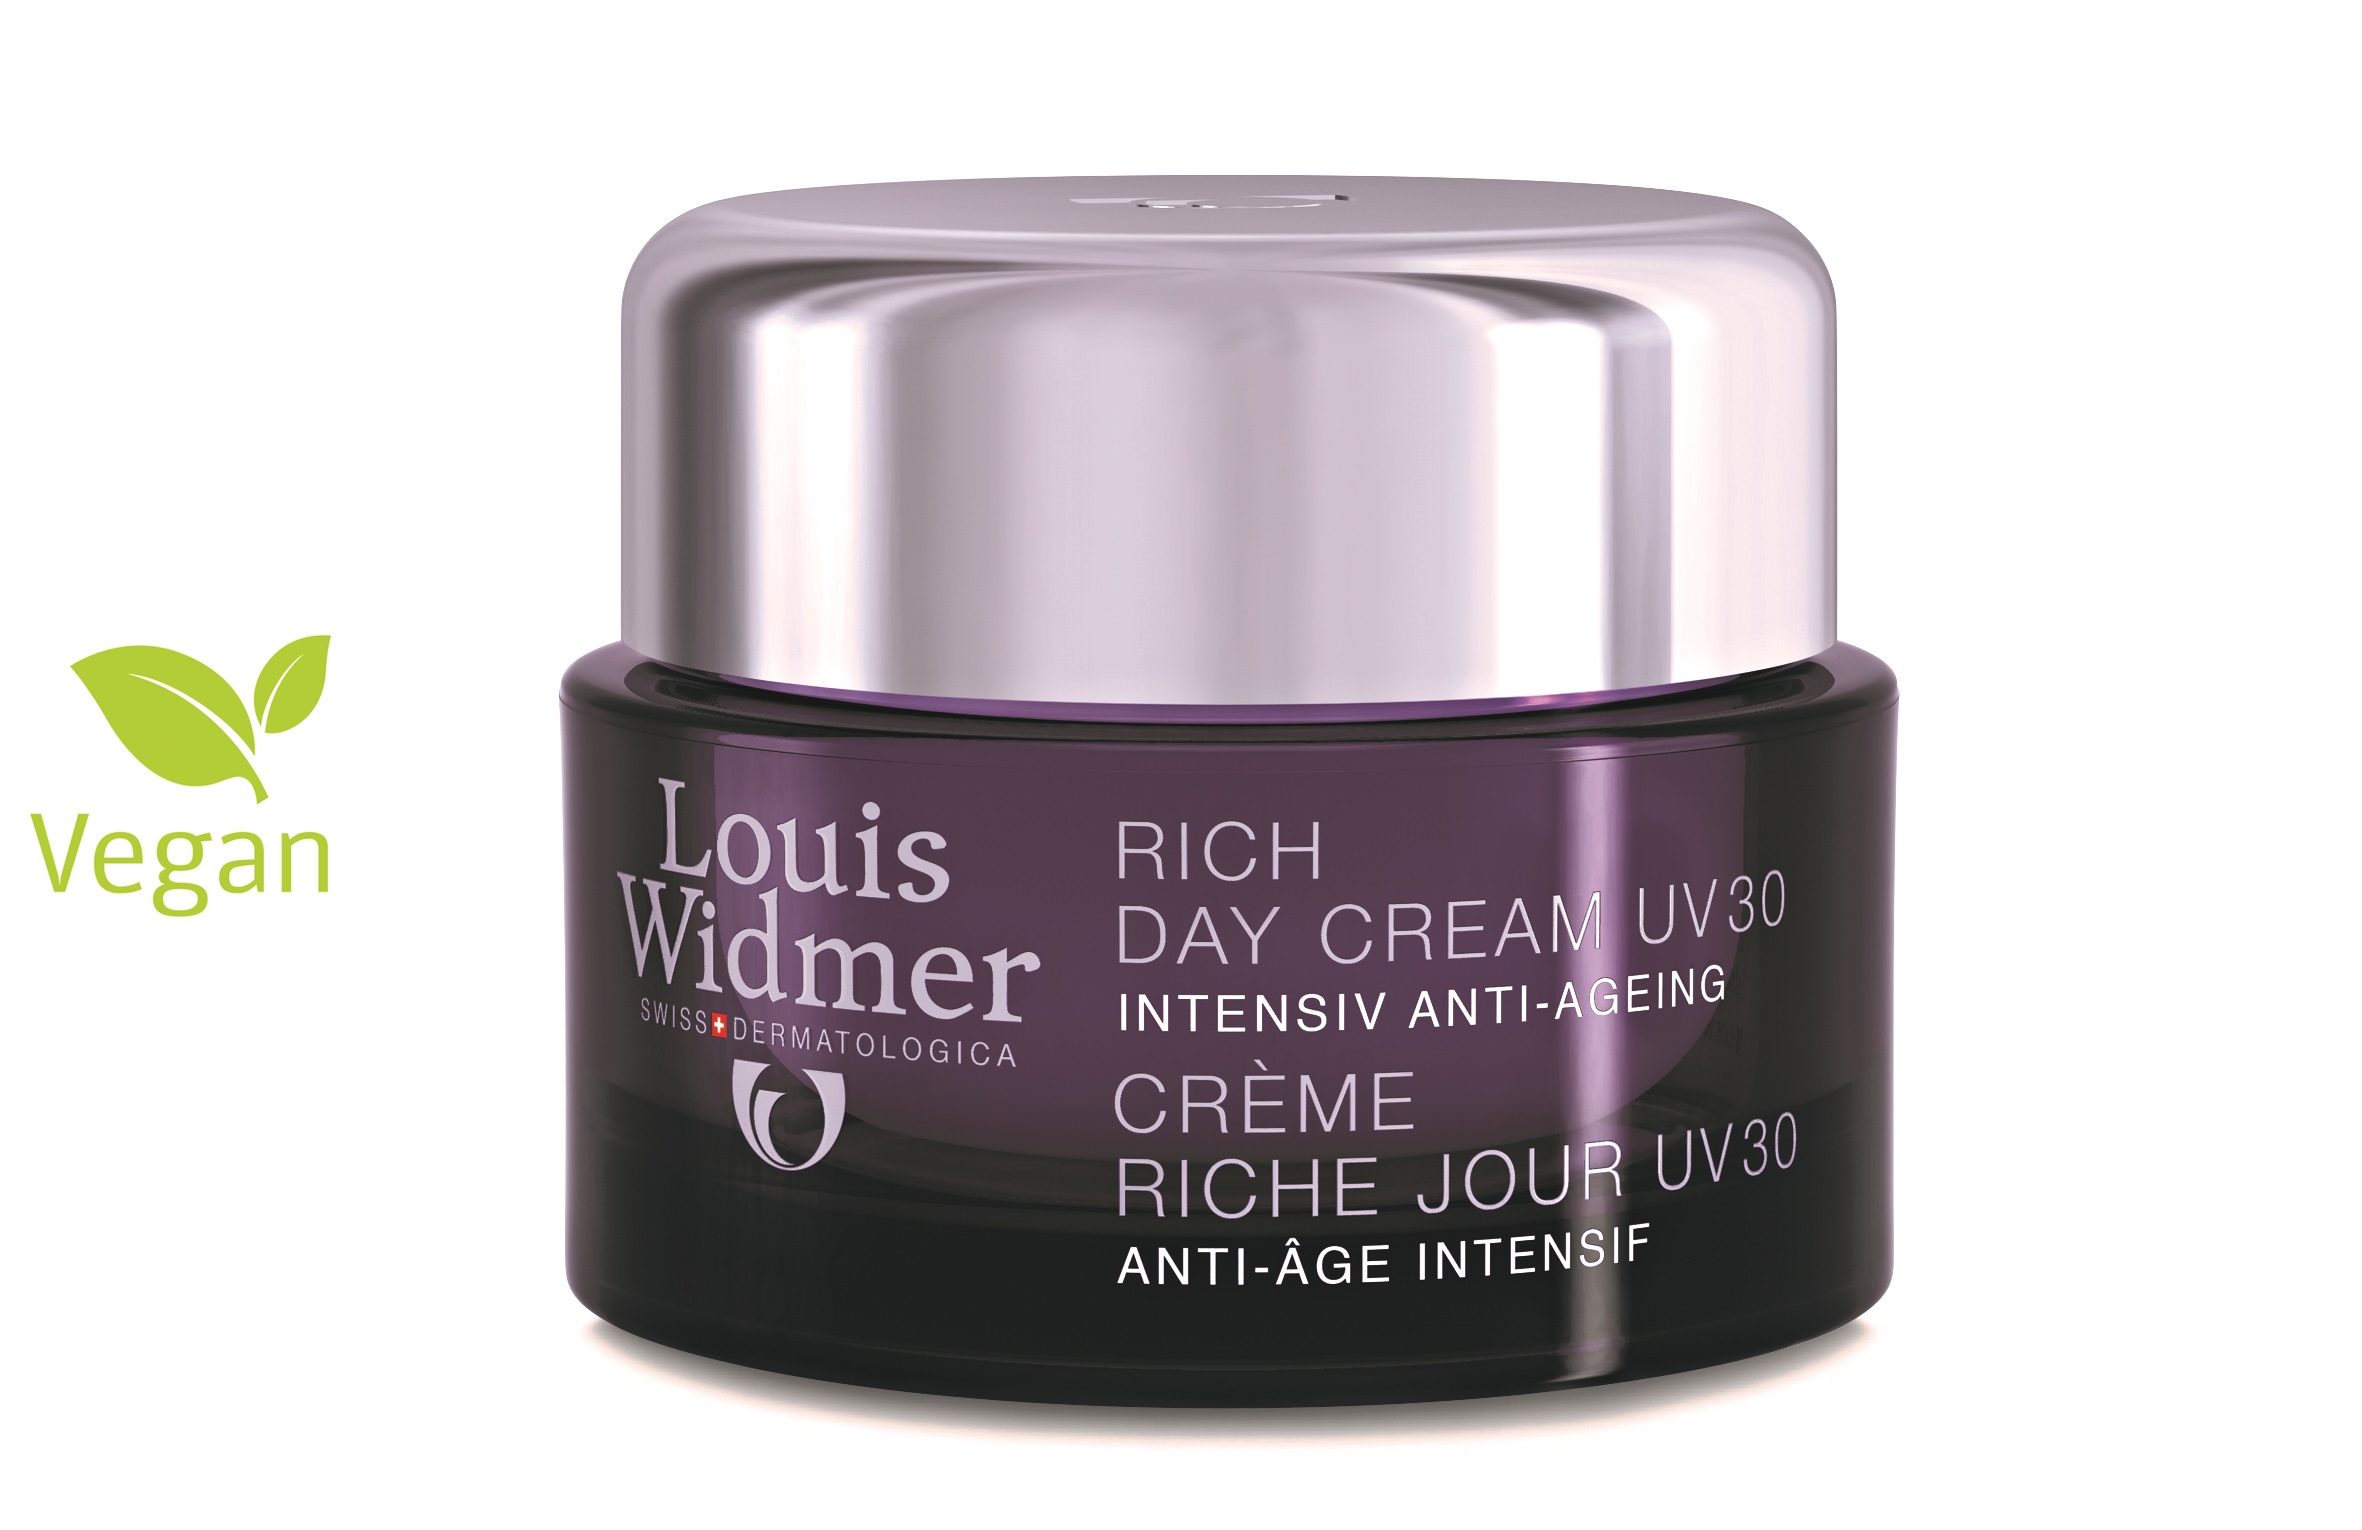 Widmer Rich Day Cream UV 30